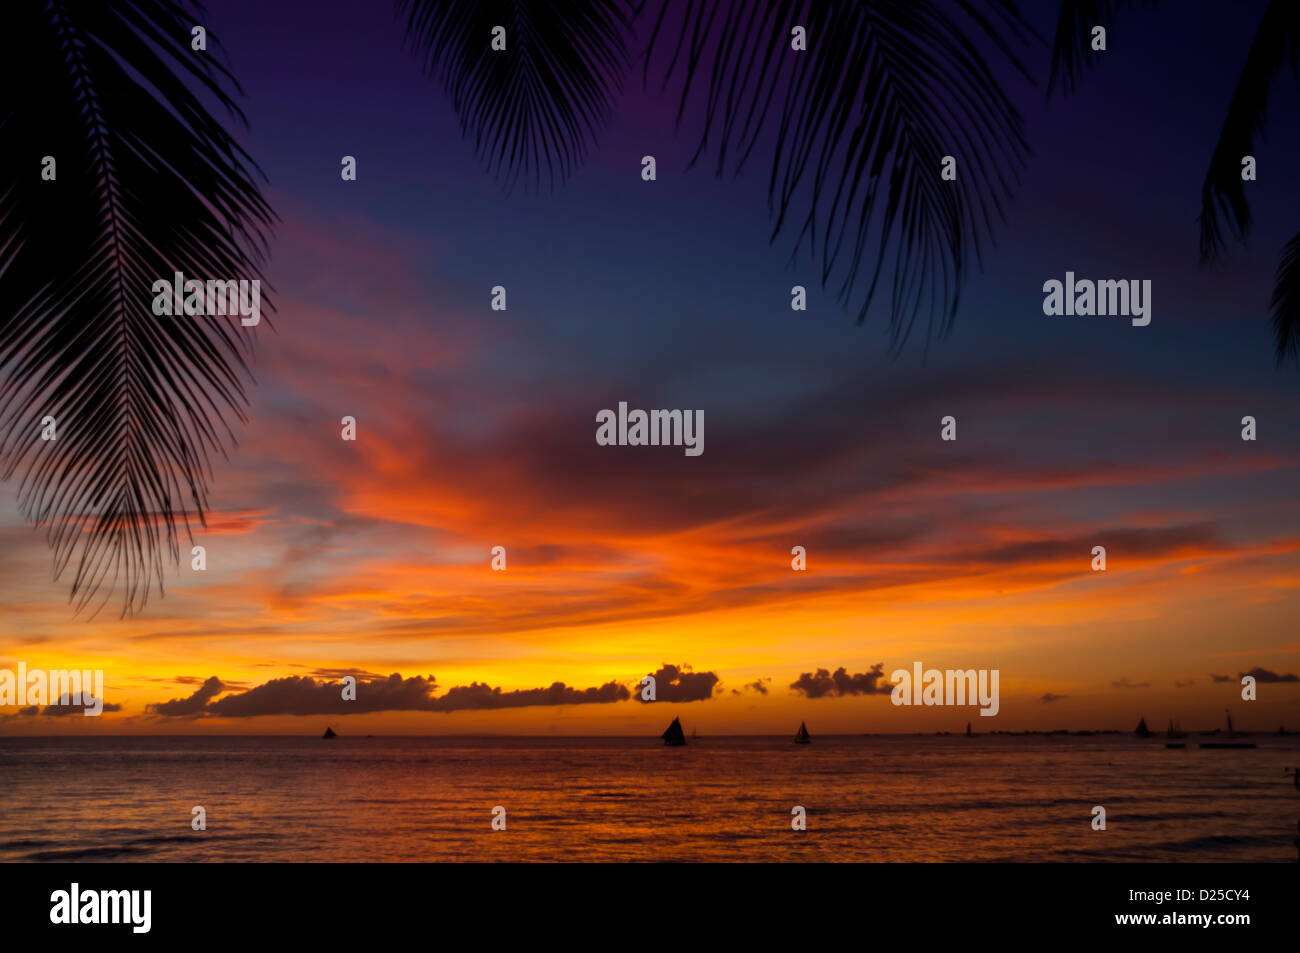 Bellissimo tramonto tropicale con Palm tree silhouette. Foto Stock